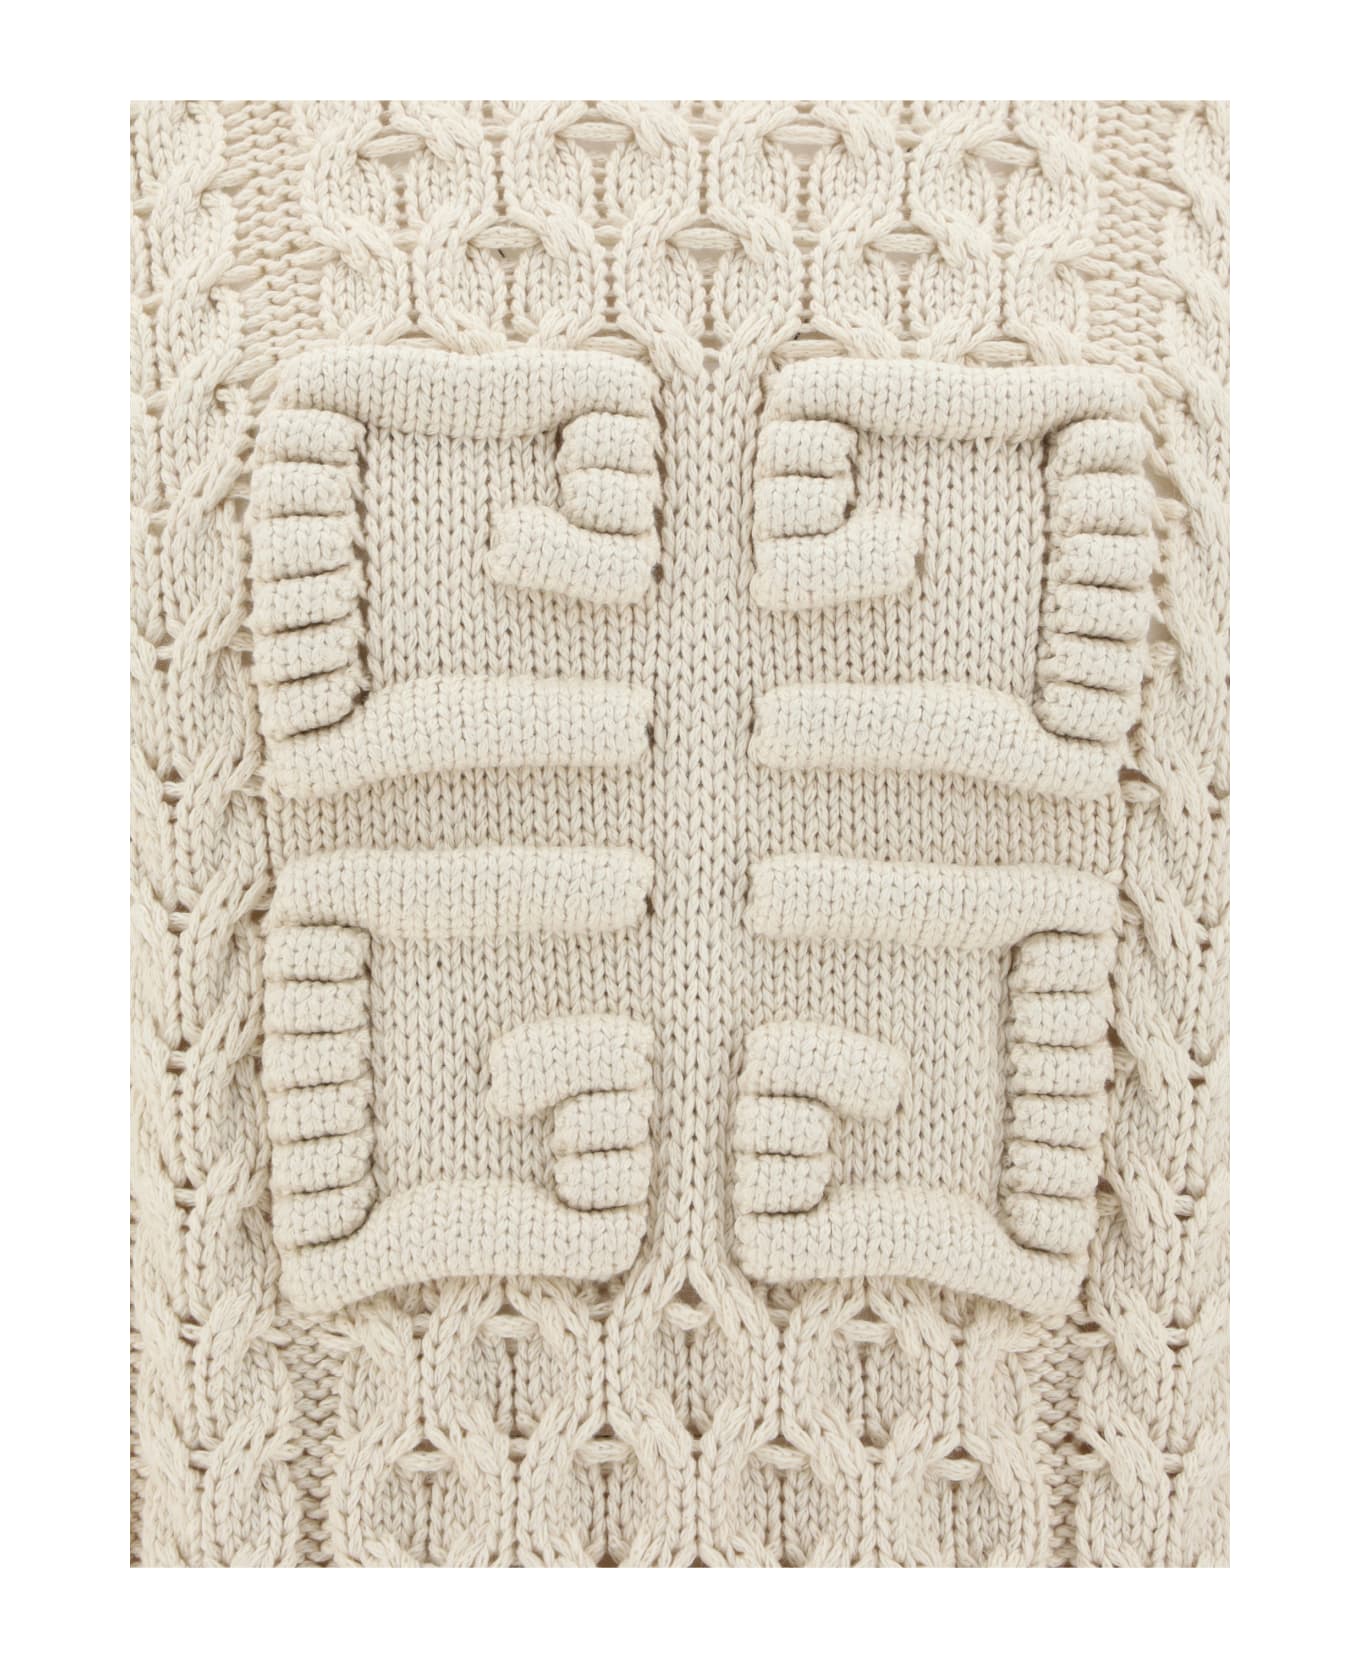 Givenchy 4g Knit Sweater - Beige ニットウェア